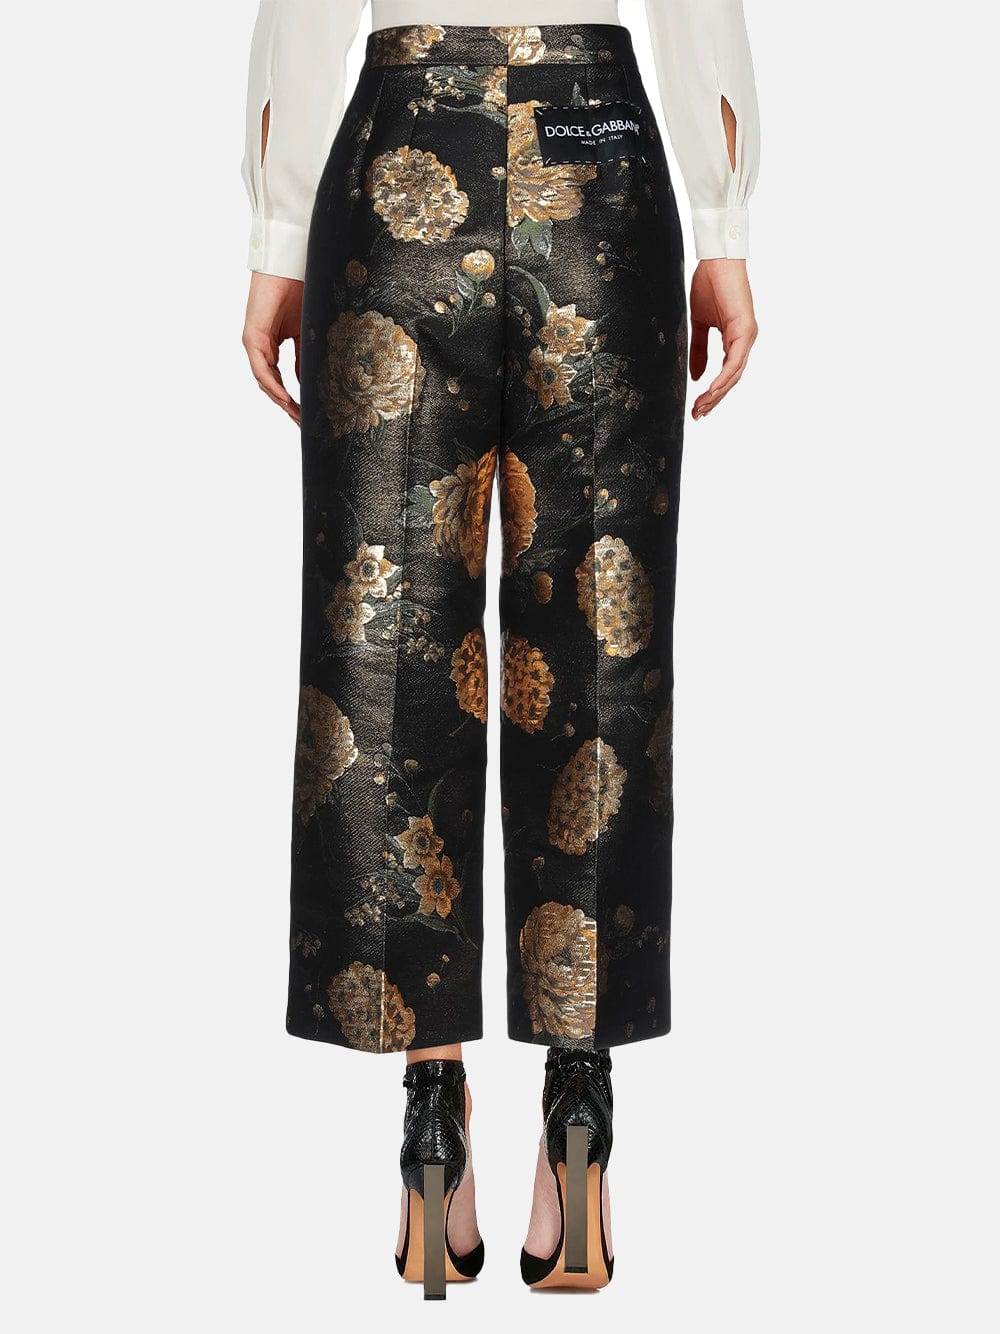 Dolce & Gabbana Floral Print Cropped Pants